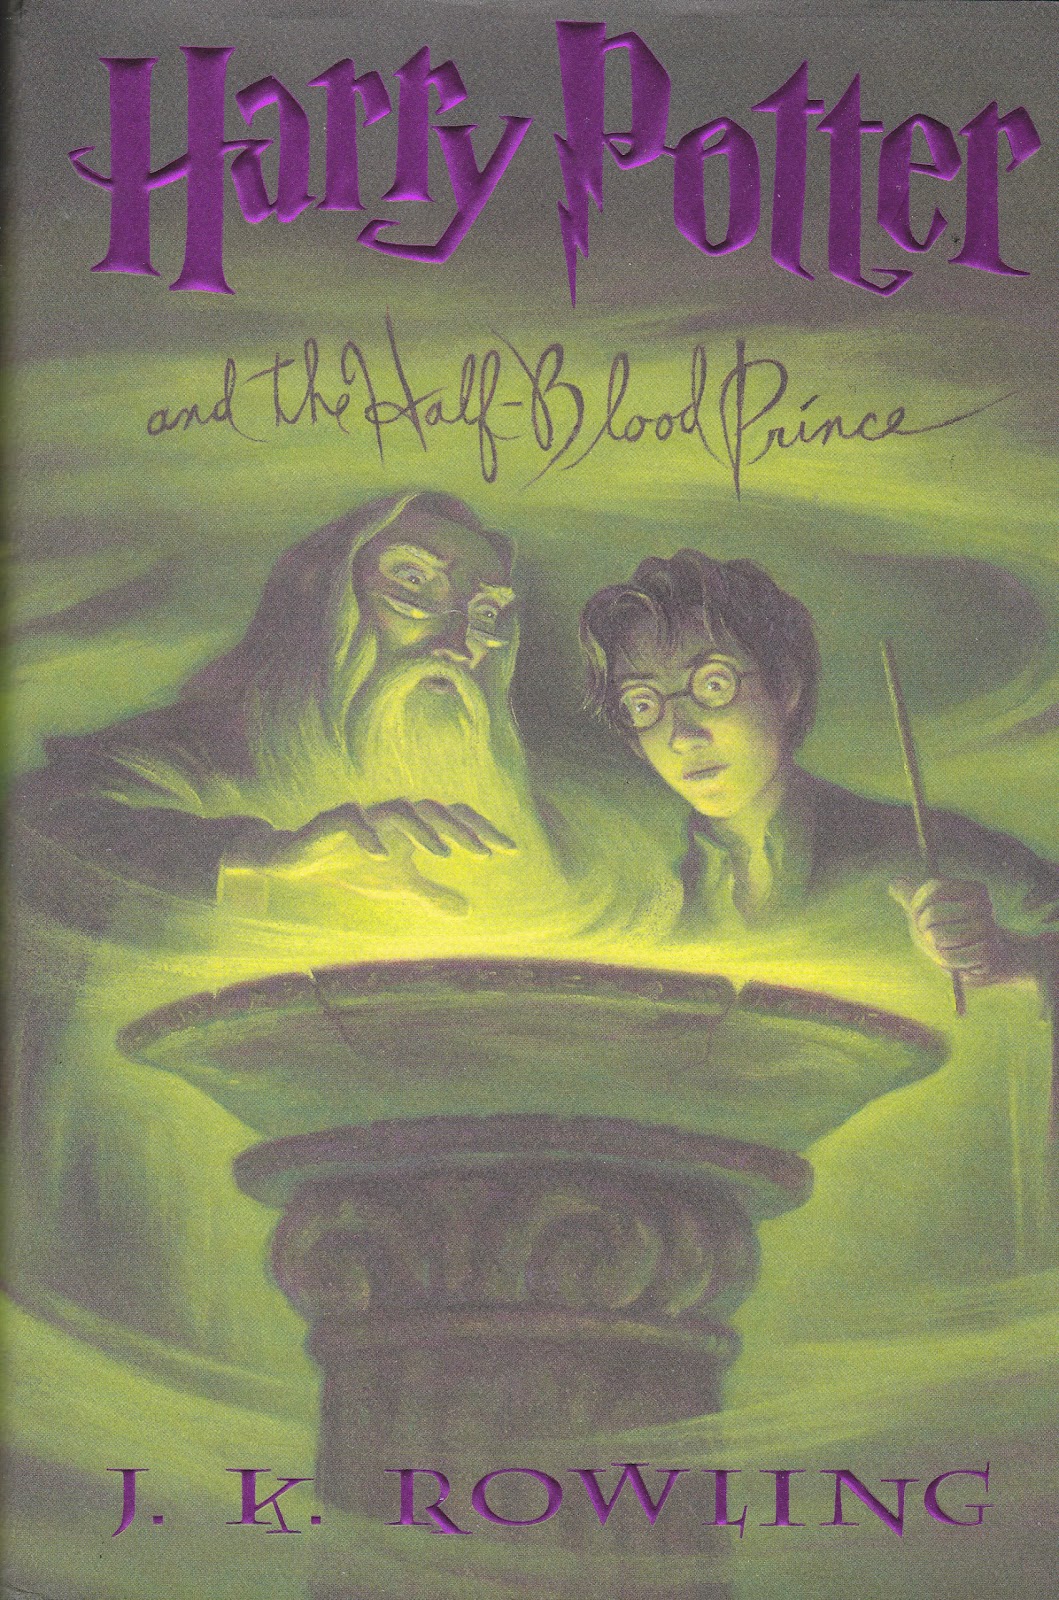 http://1.bp.blogspot.com/-TSgH9XuDuIo/UDc22tJr2RI/AAAAAAAAAQg/Eq-GWqgJdso/s1600/Harry+Potter+and+the+Half-Blood+Prince.jpg